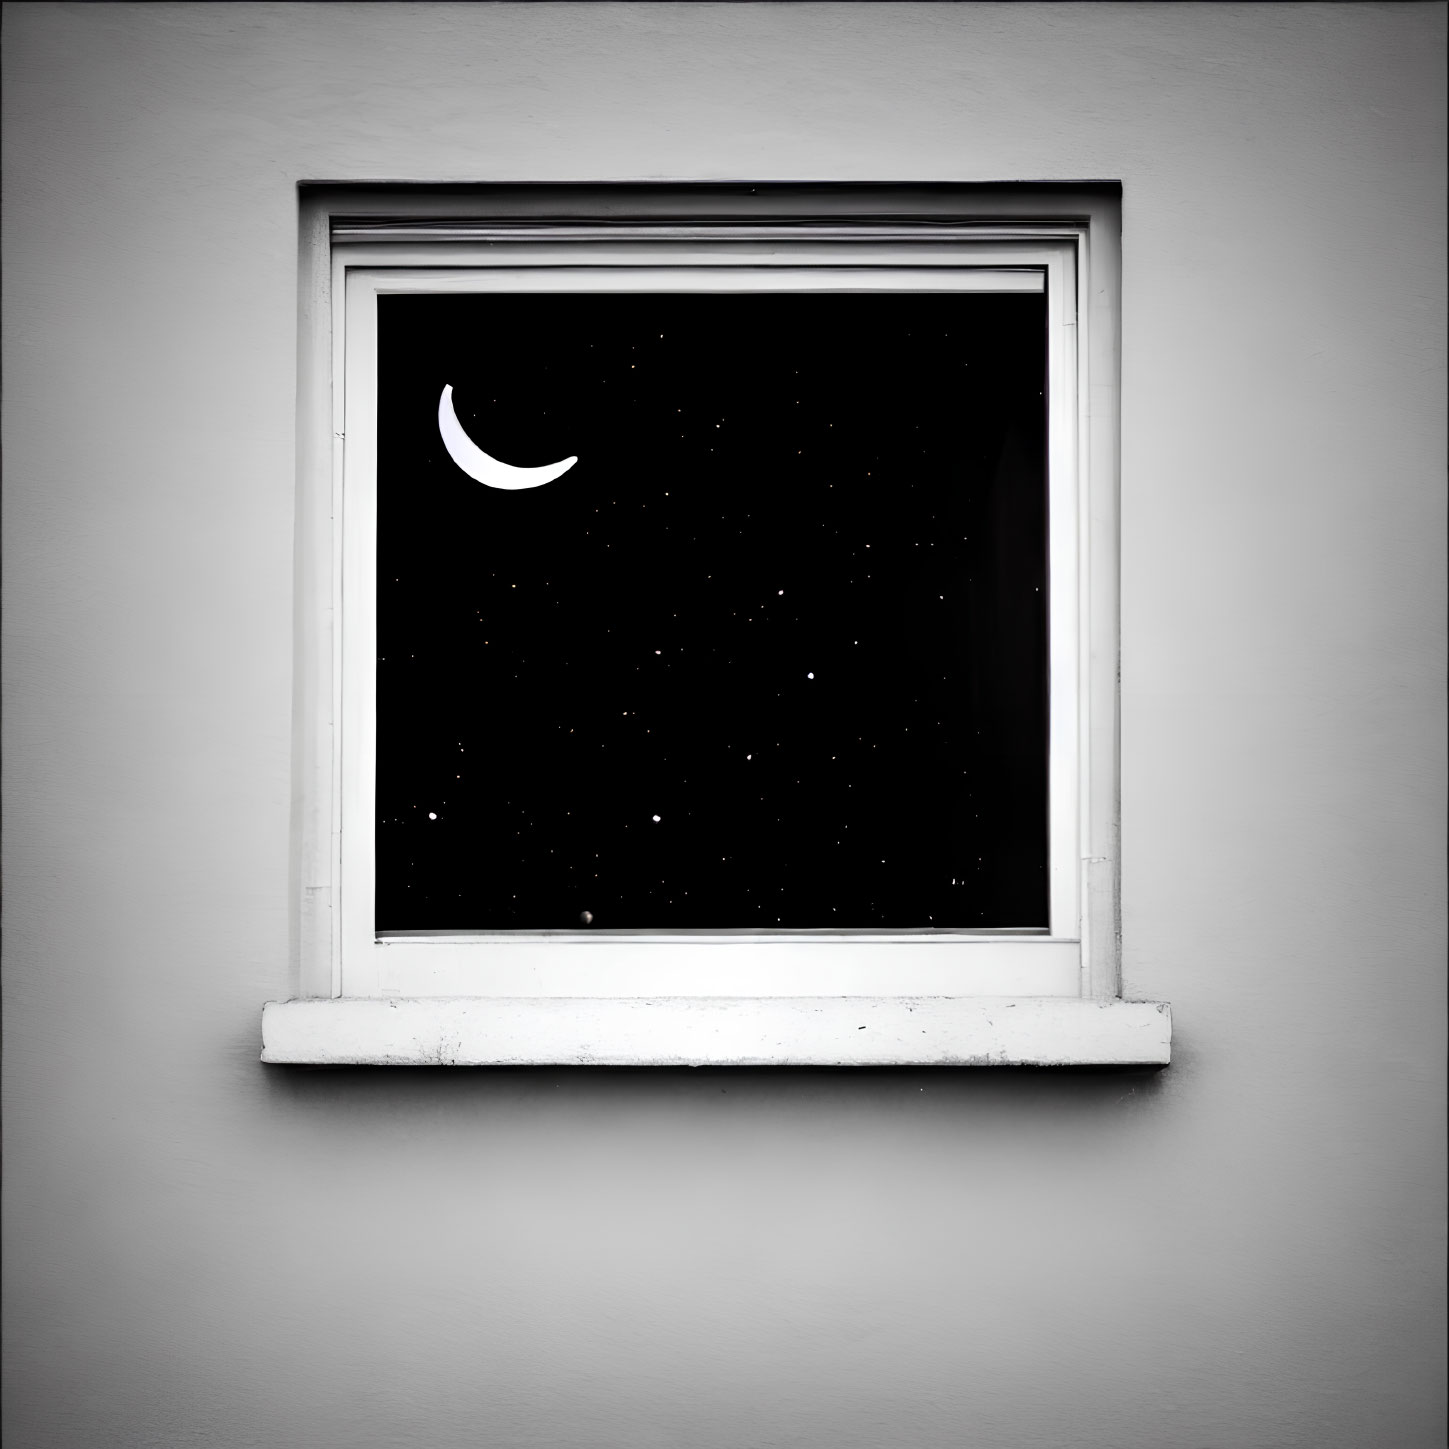 Crescent moon through square window on starry night sky